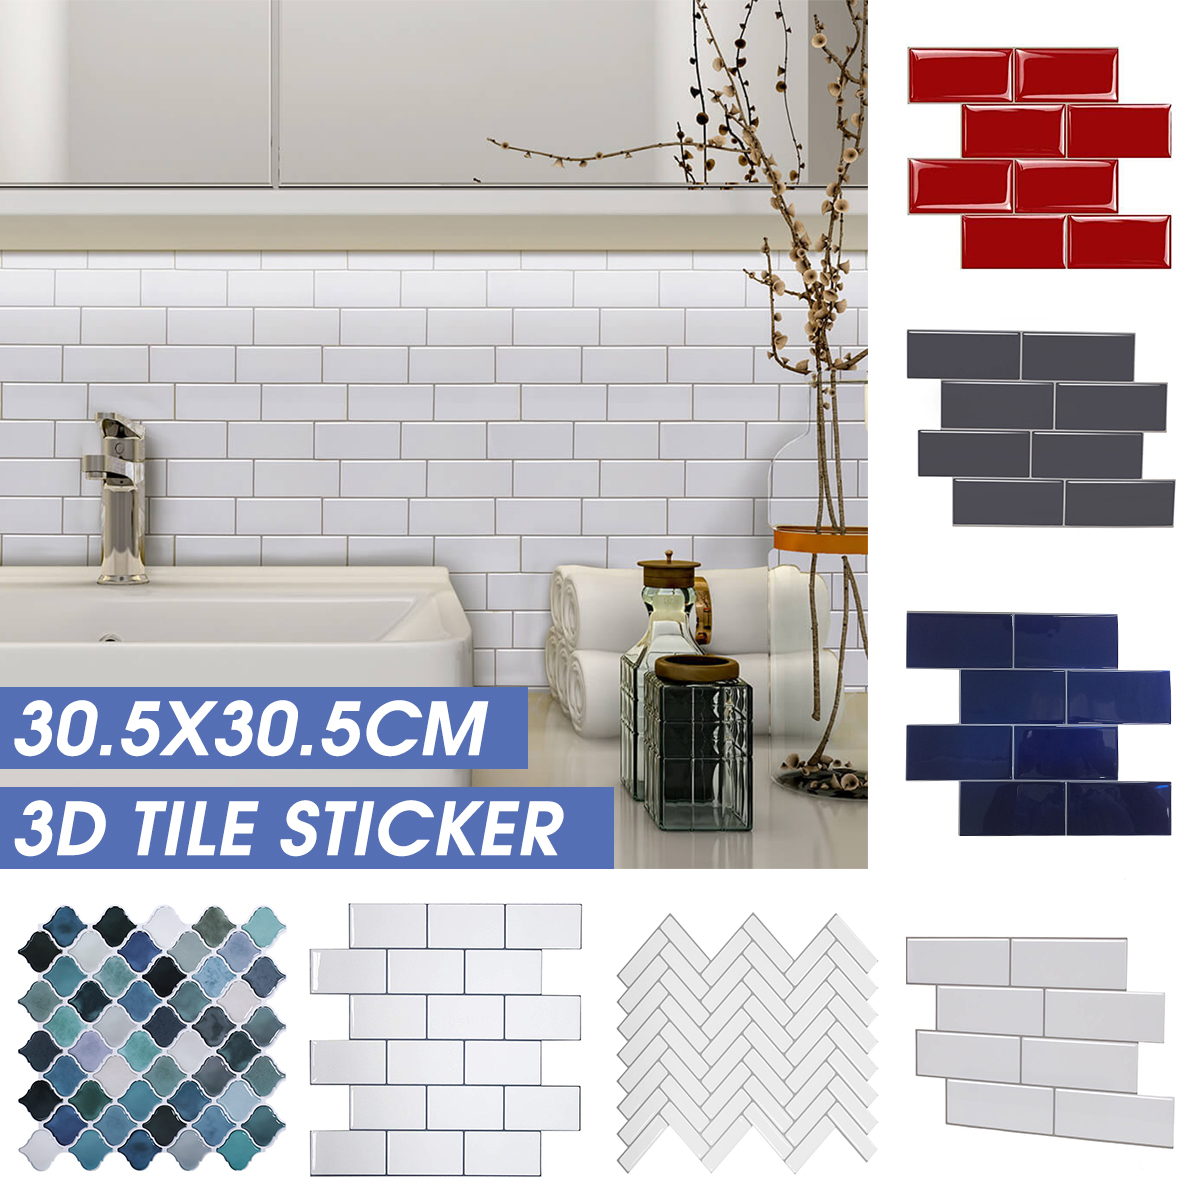 12inch-DIY-Tile-Stickers-3D-Brick-Wall-Self-adhesive-Sticker-Bathroom-Kitchen-1802619-1